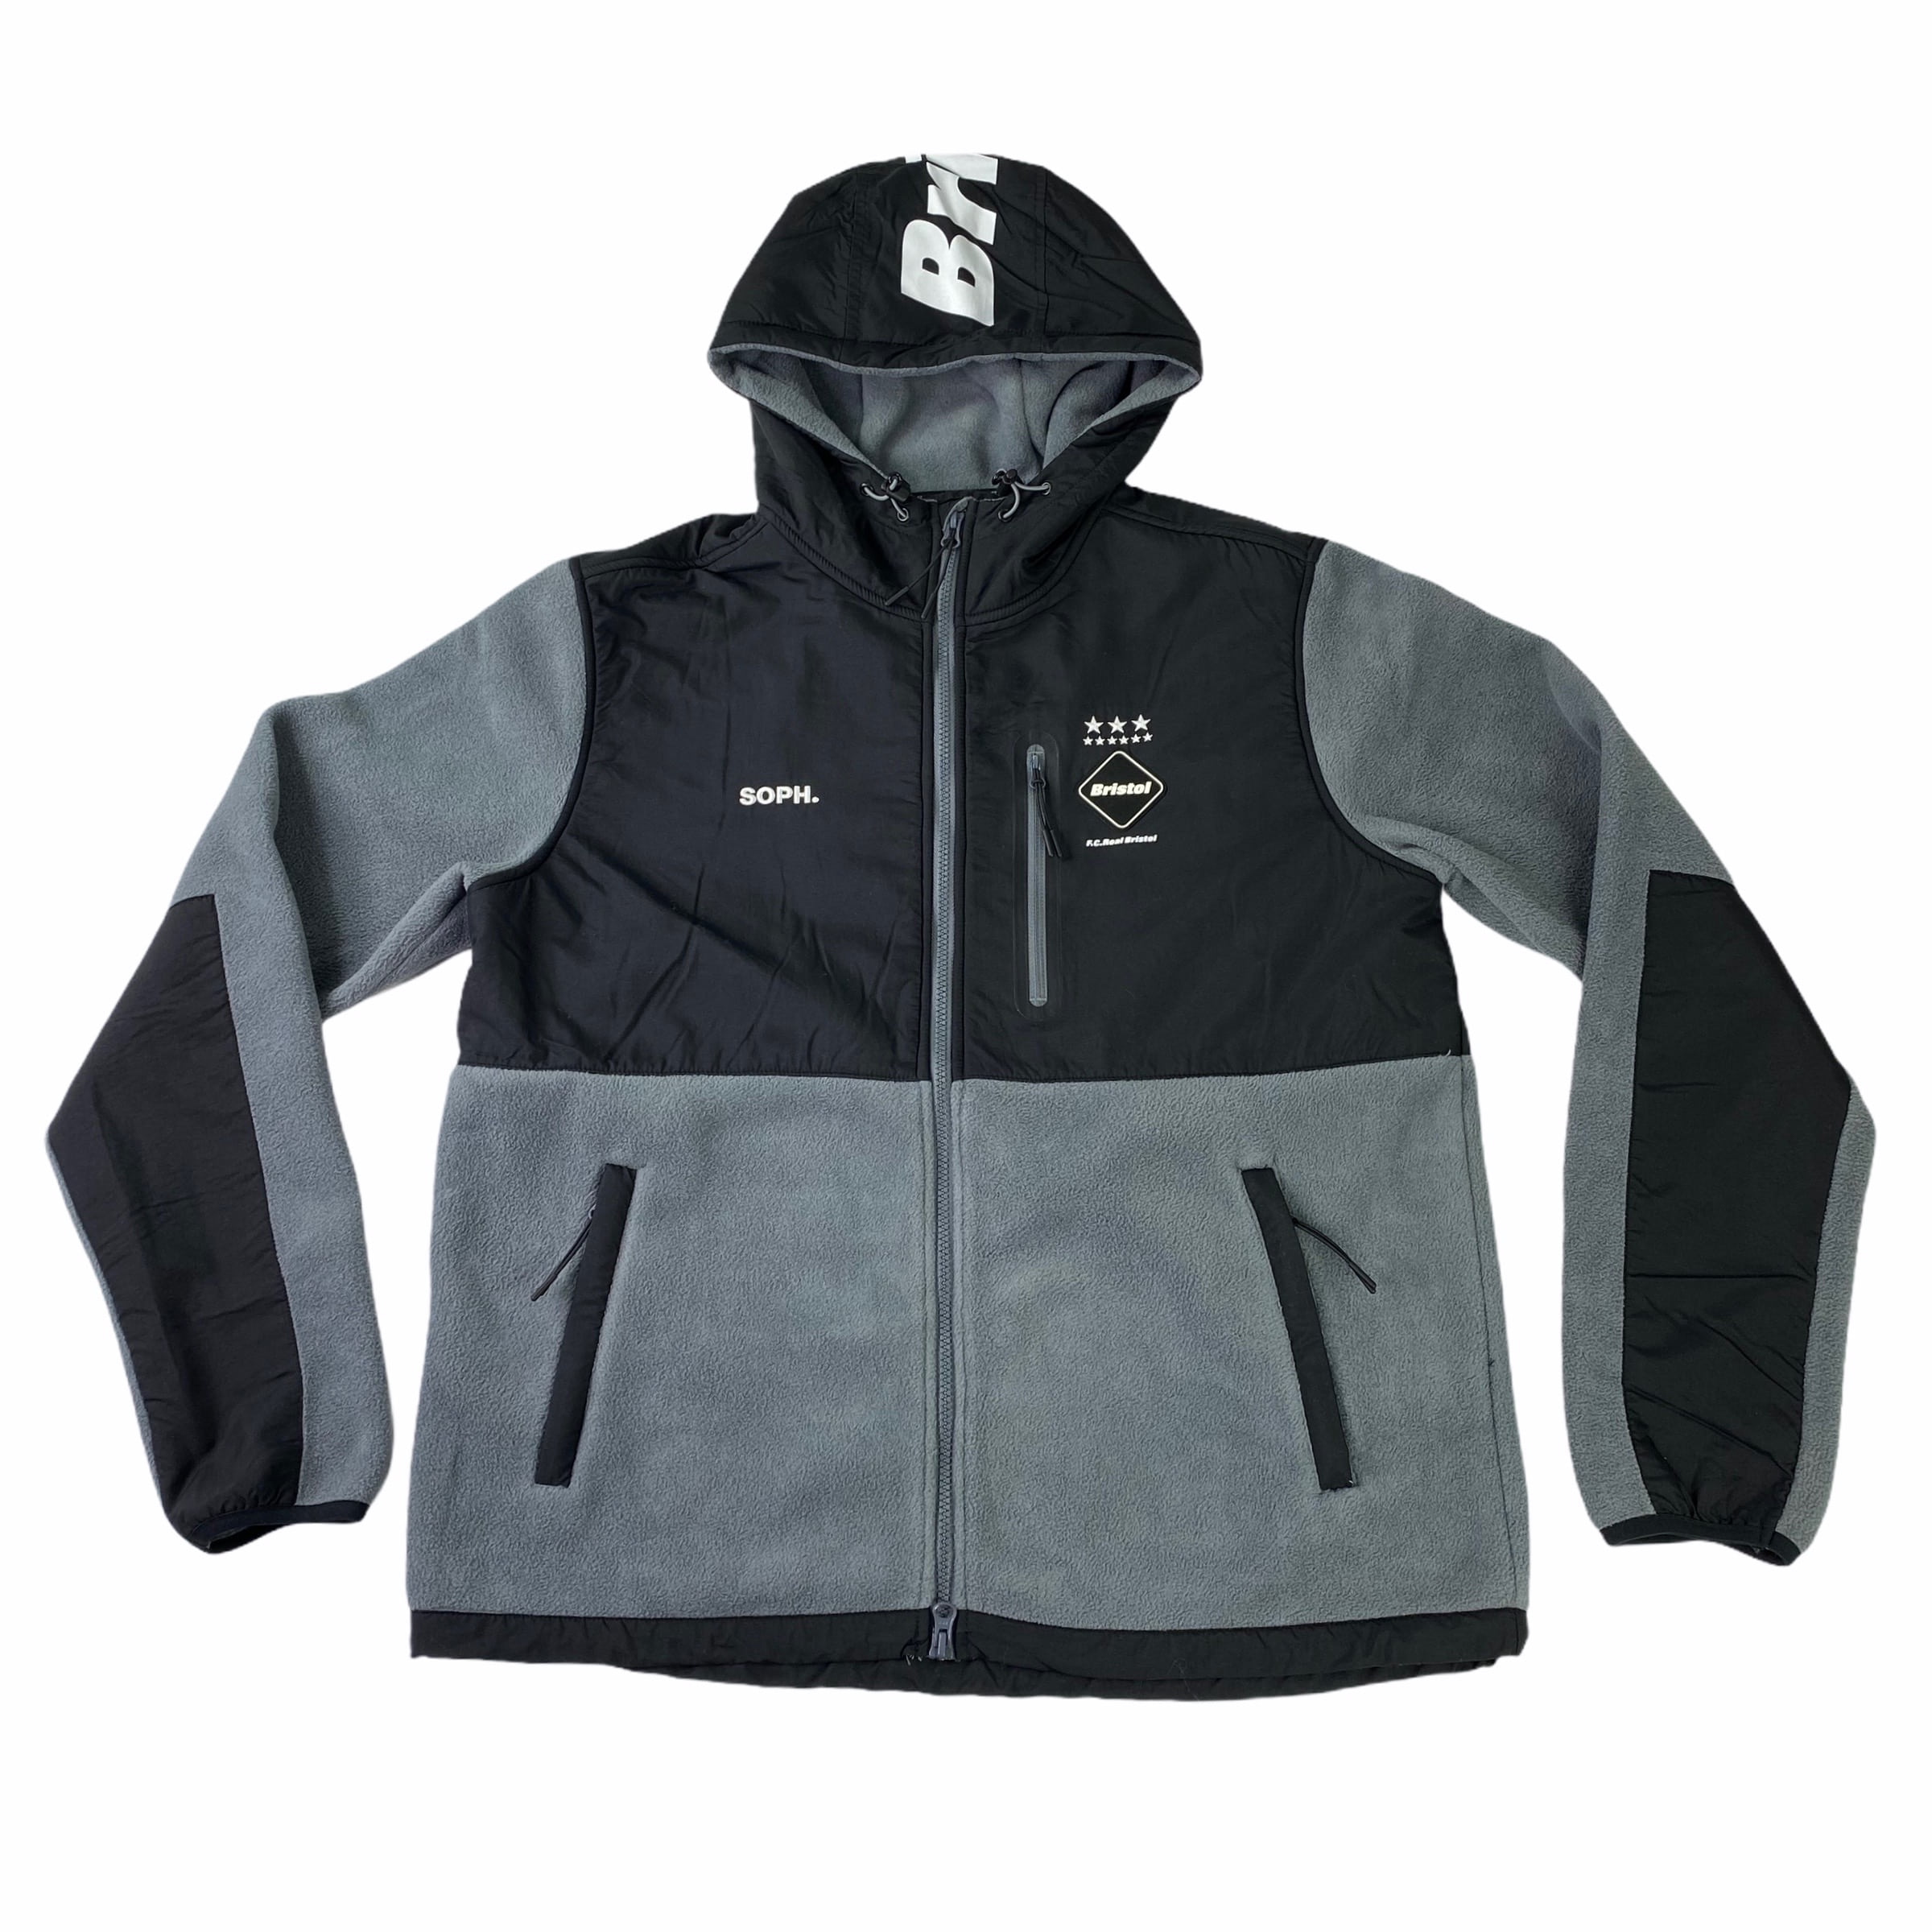 [F.C. Real Bristol X Soph] Fleece Jacket - Size XL